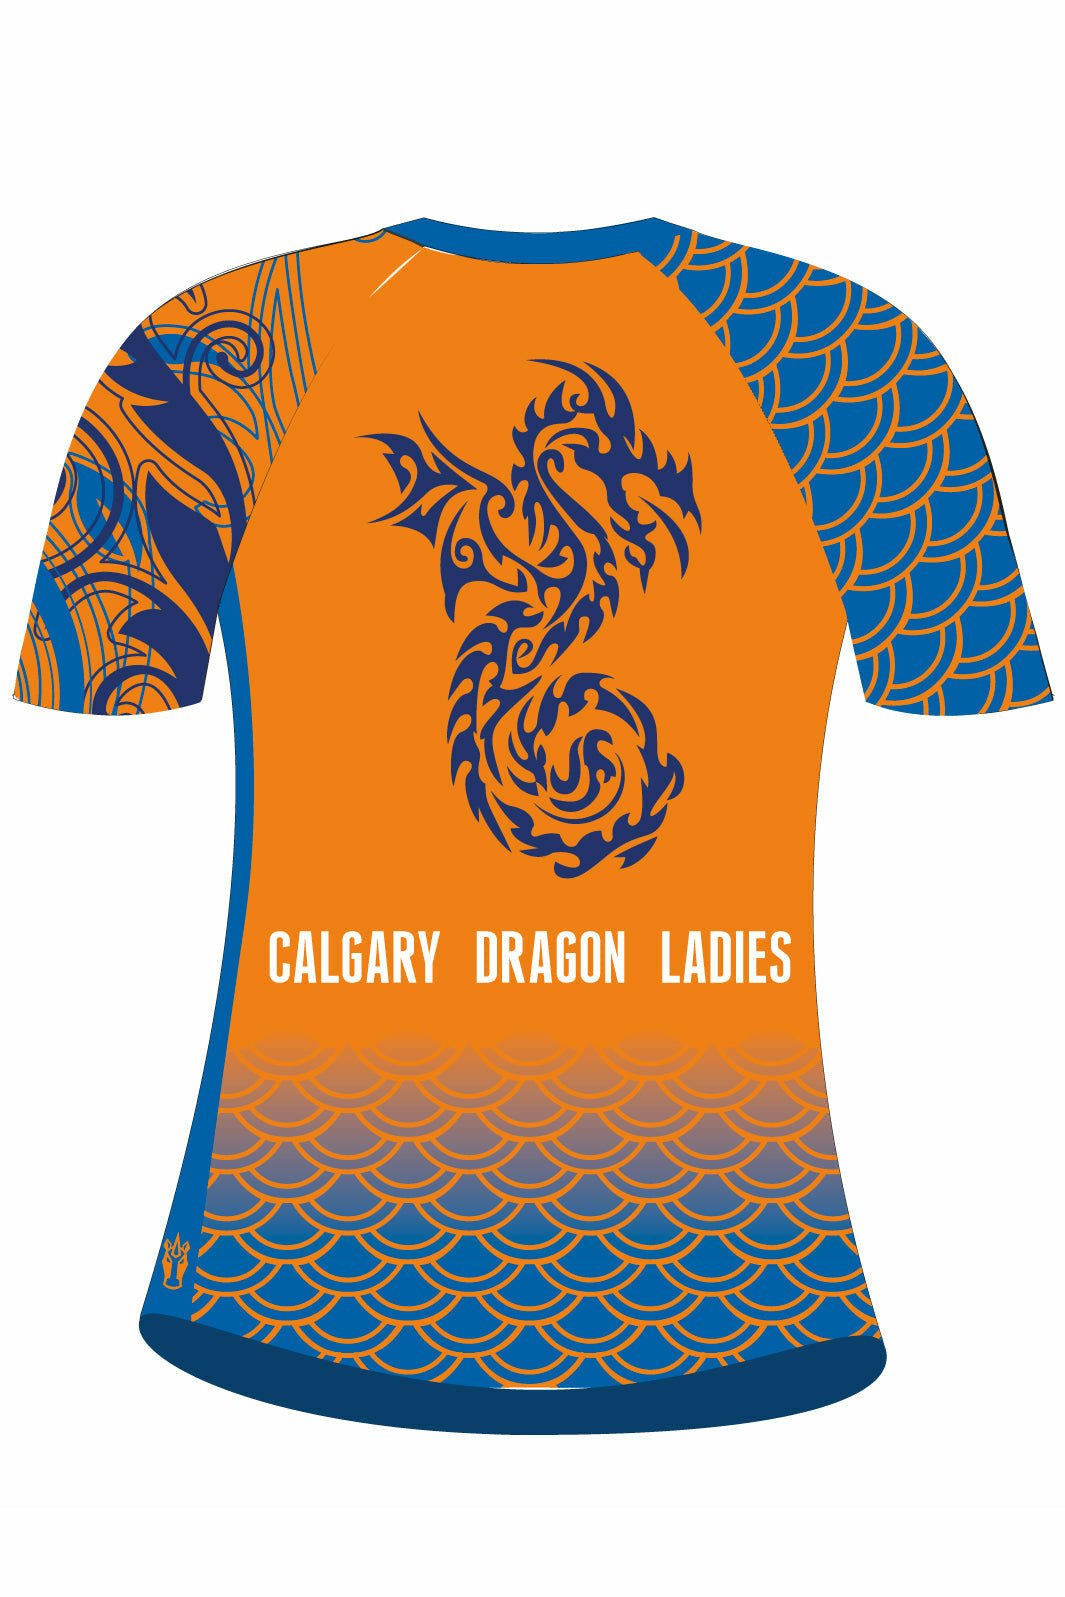 Calgary Dragon Ladies Women's h2O Athletic Jersey Short Sleeve - Oddball Workshop